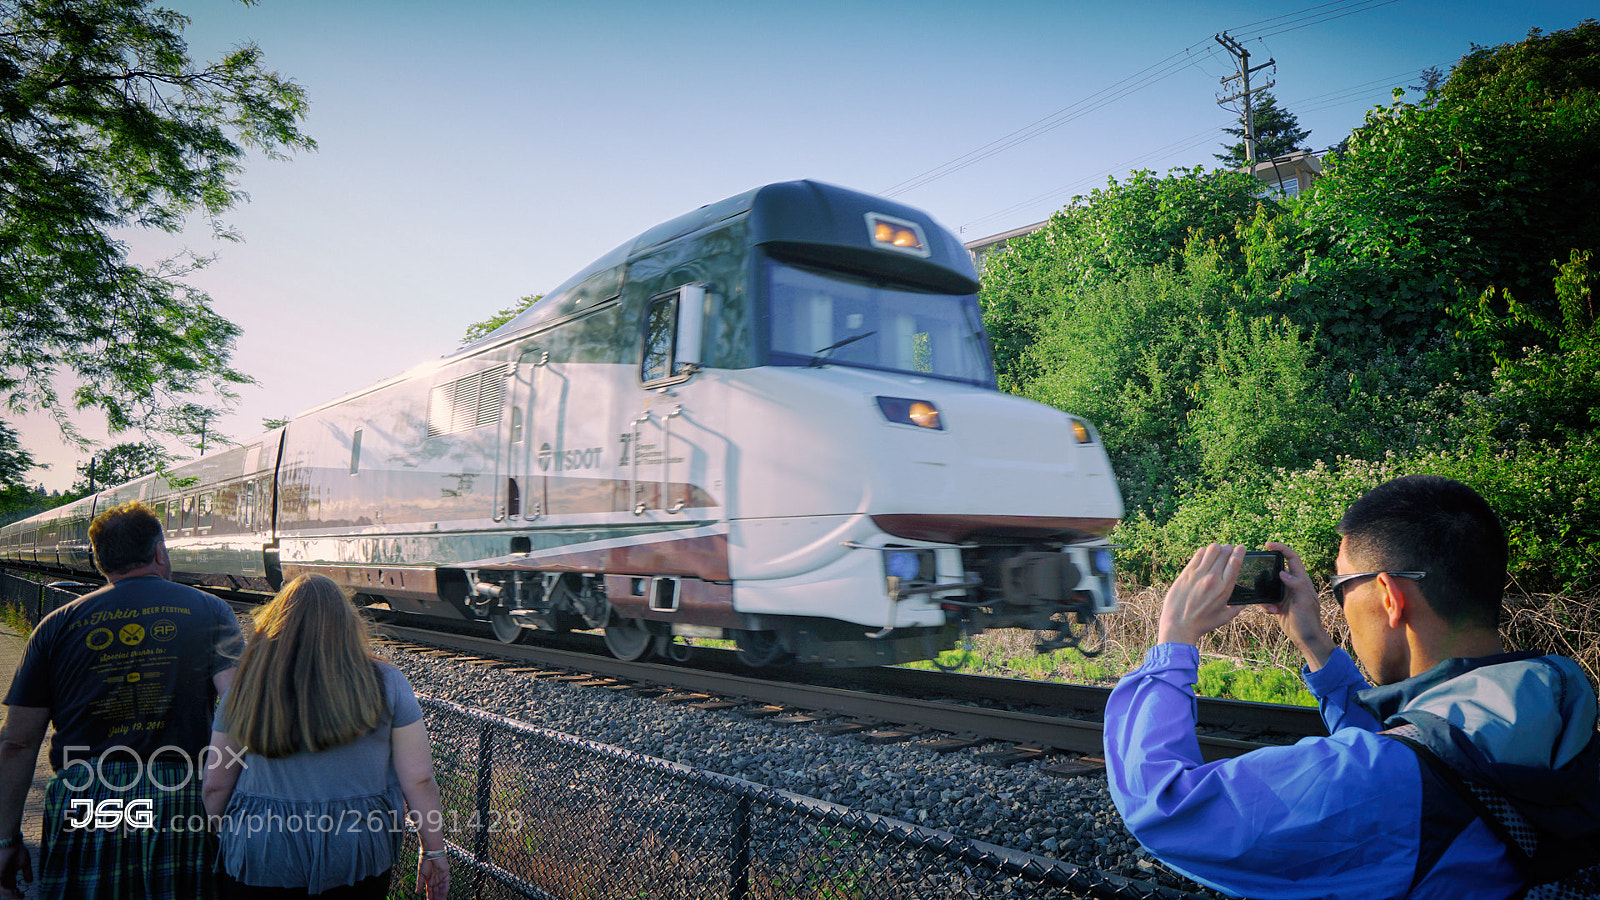 Sony a6000 sample photo. Amtrak train photography